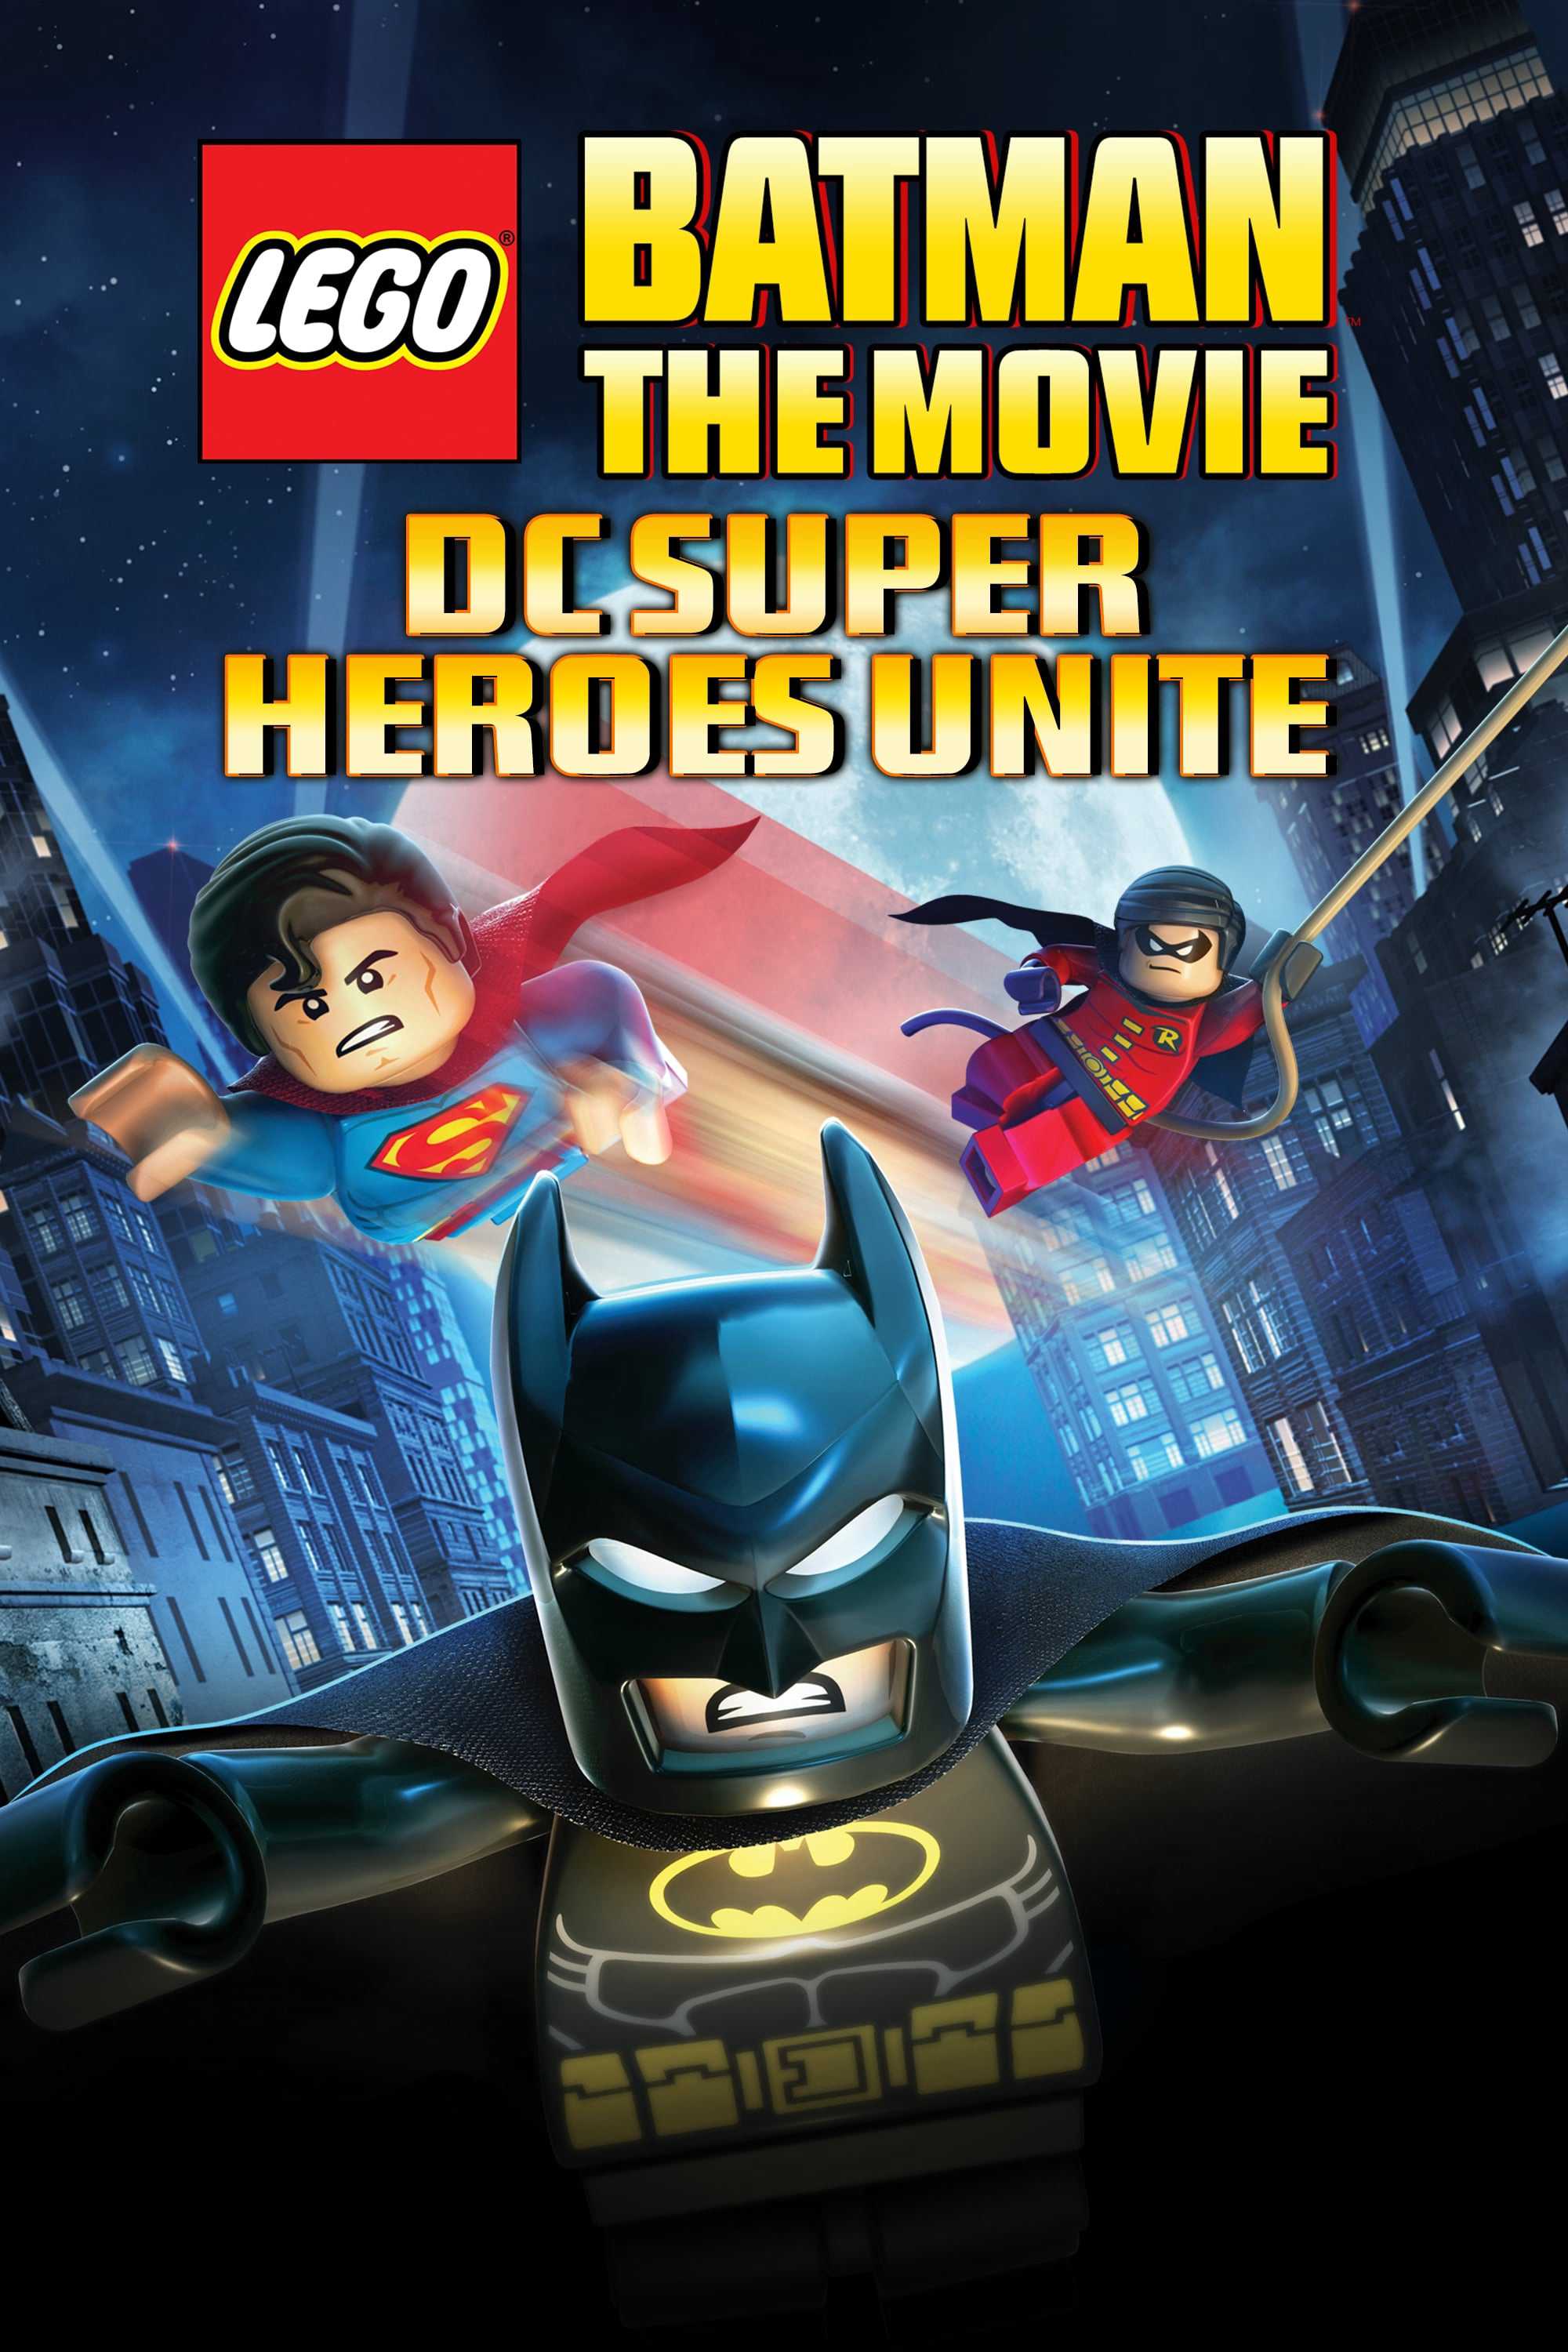 Lego batman: the movie - dc super heroes unite - Lego batman: the movie - dc super heroes unite